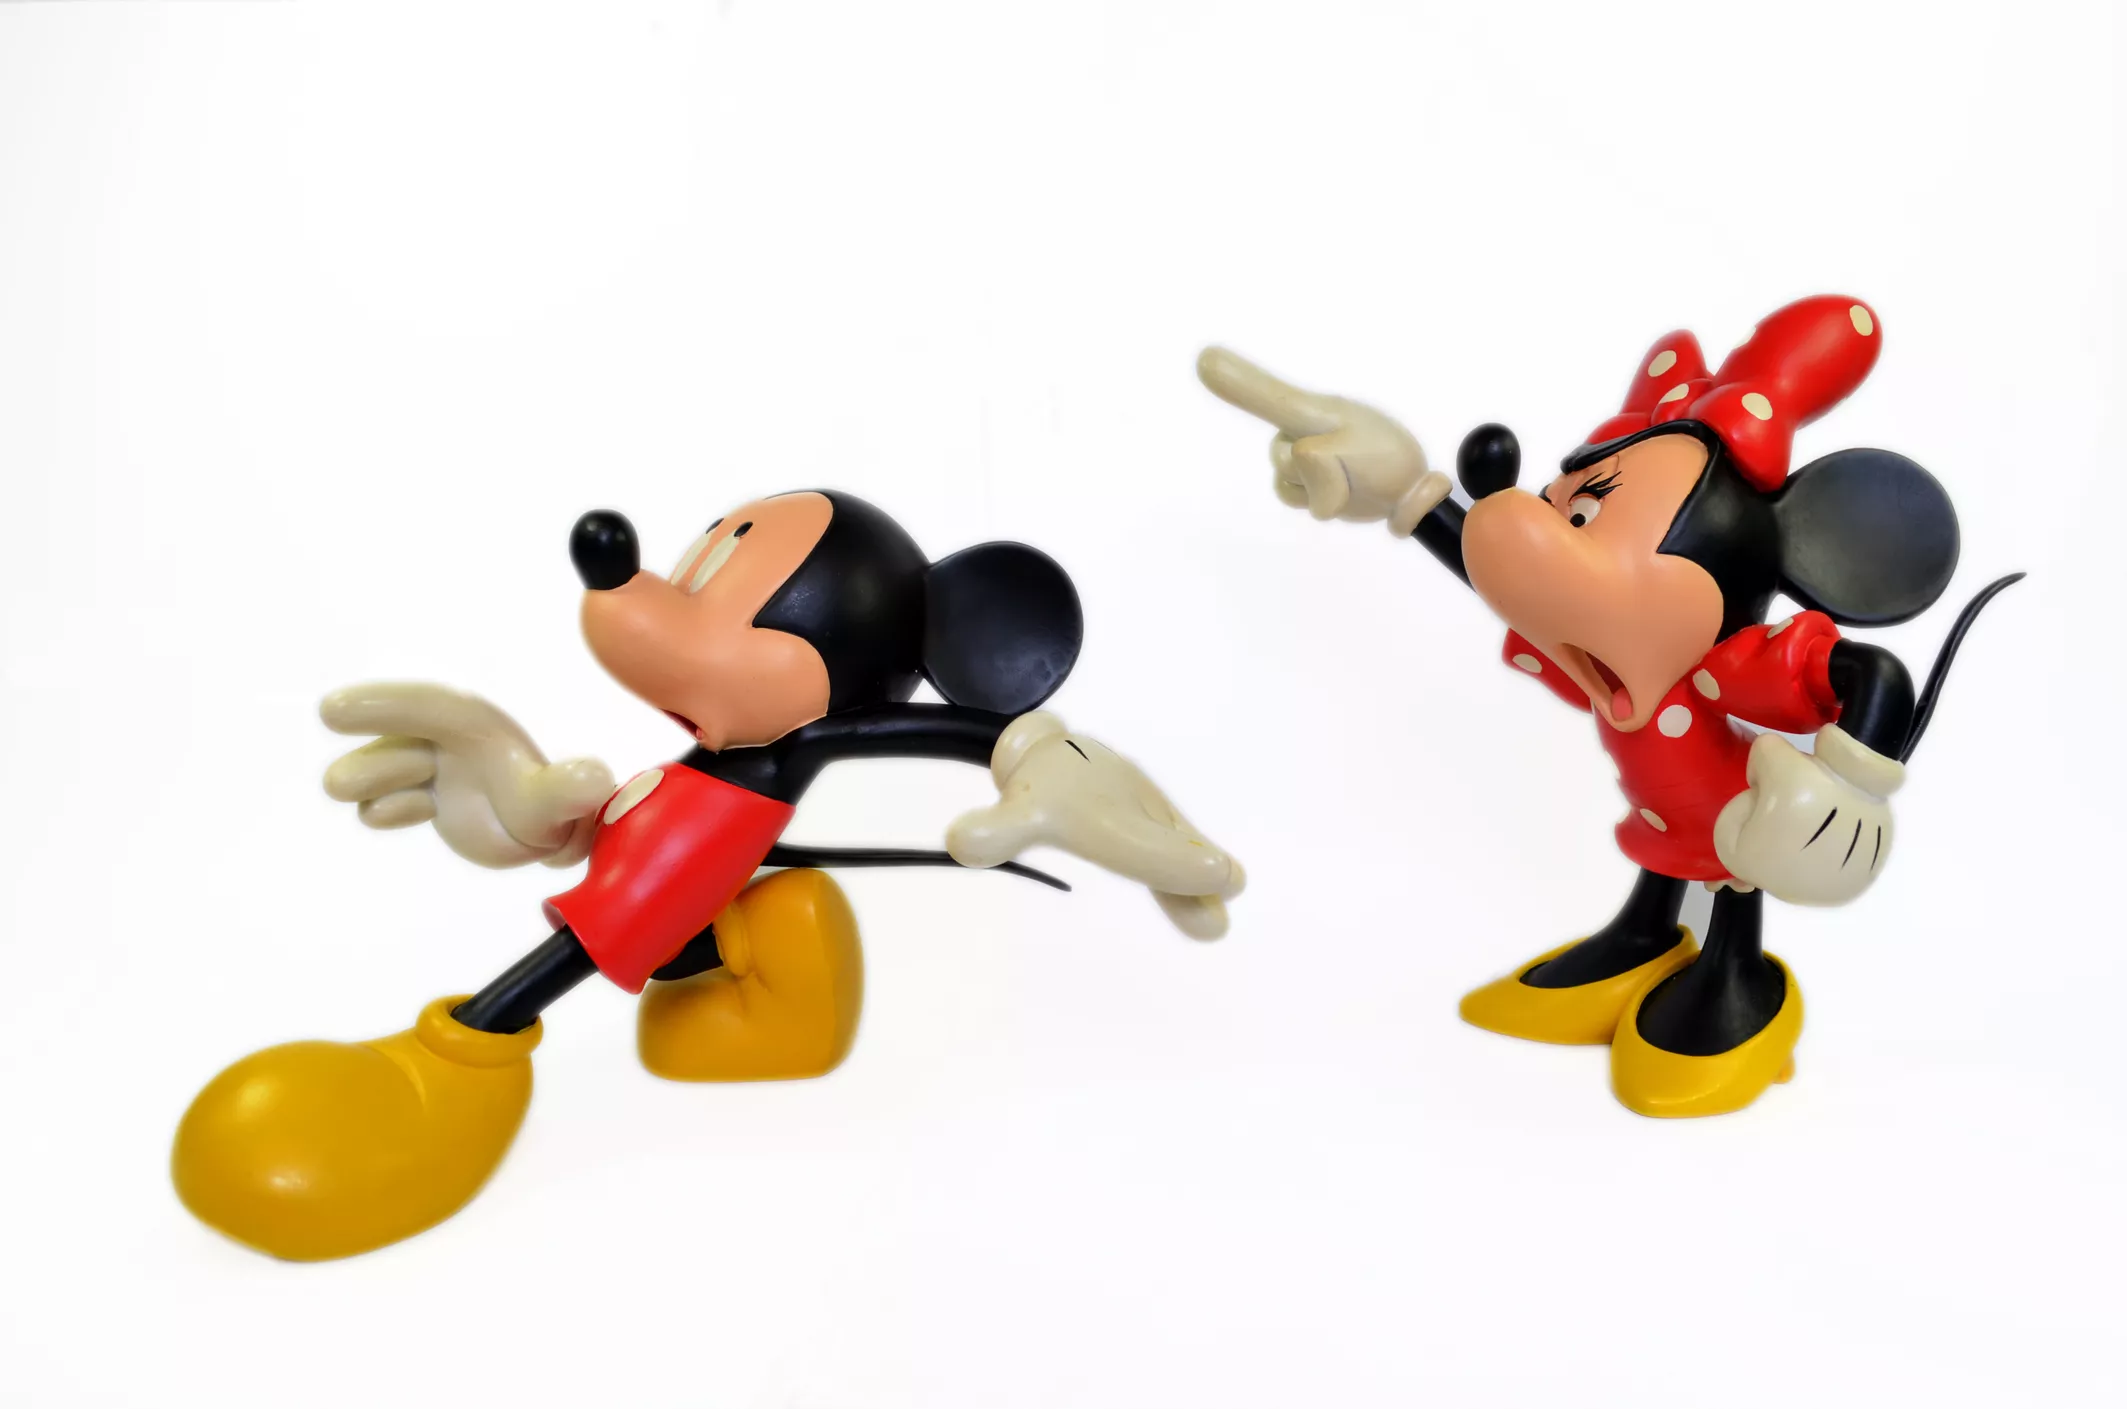 El primer fil aimat amb música va ser 'Steamboat Willie', de Walt Disney, on sona el tema tradicional nord-americà Turkey in the straw interpretat per Mickey i Minnie Mouse